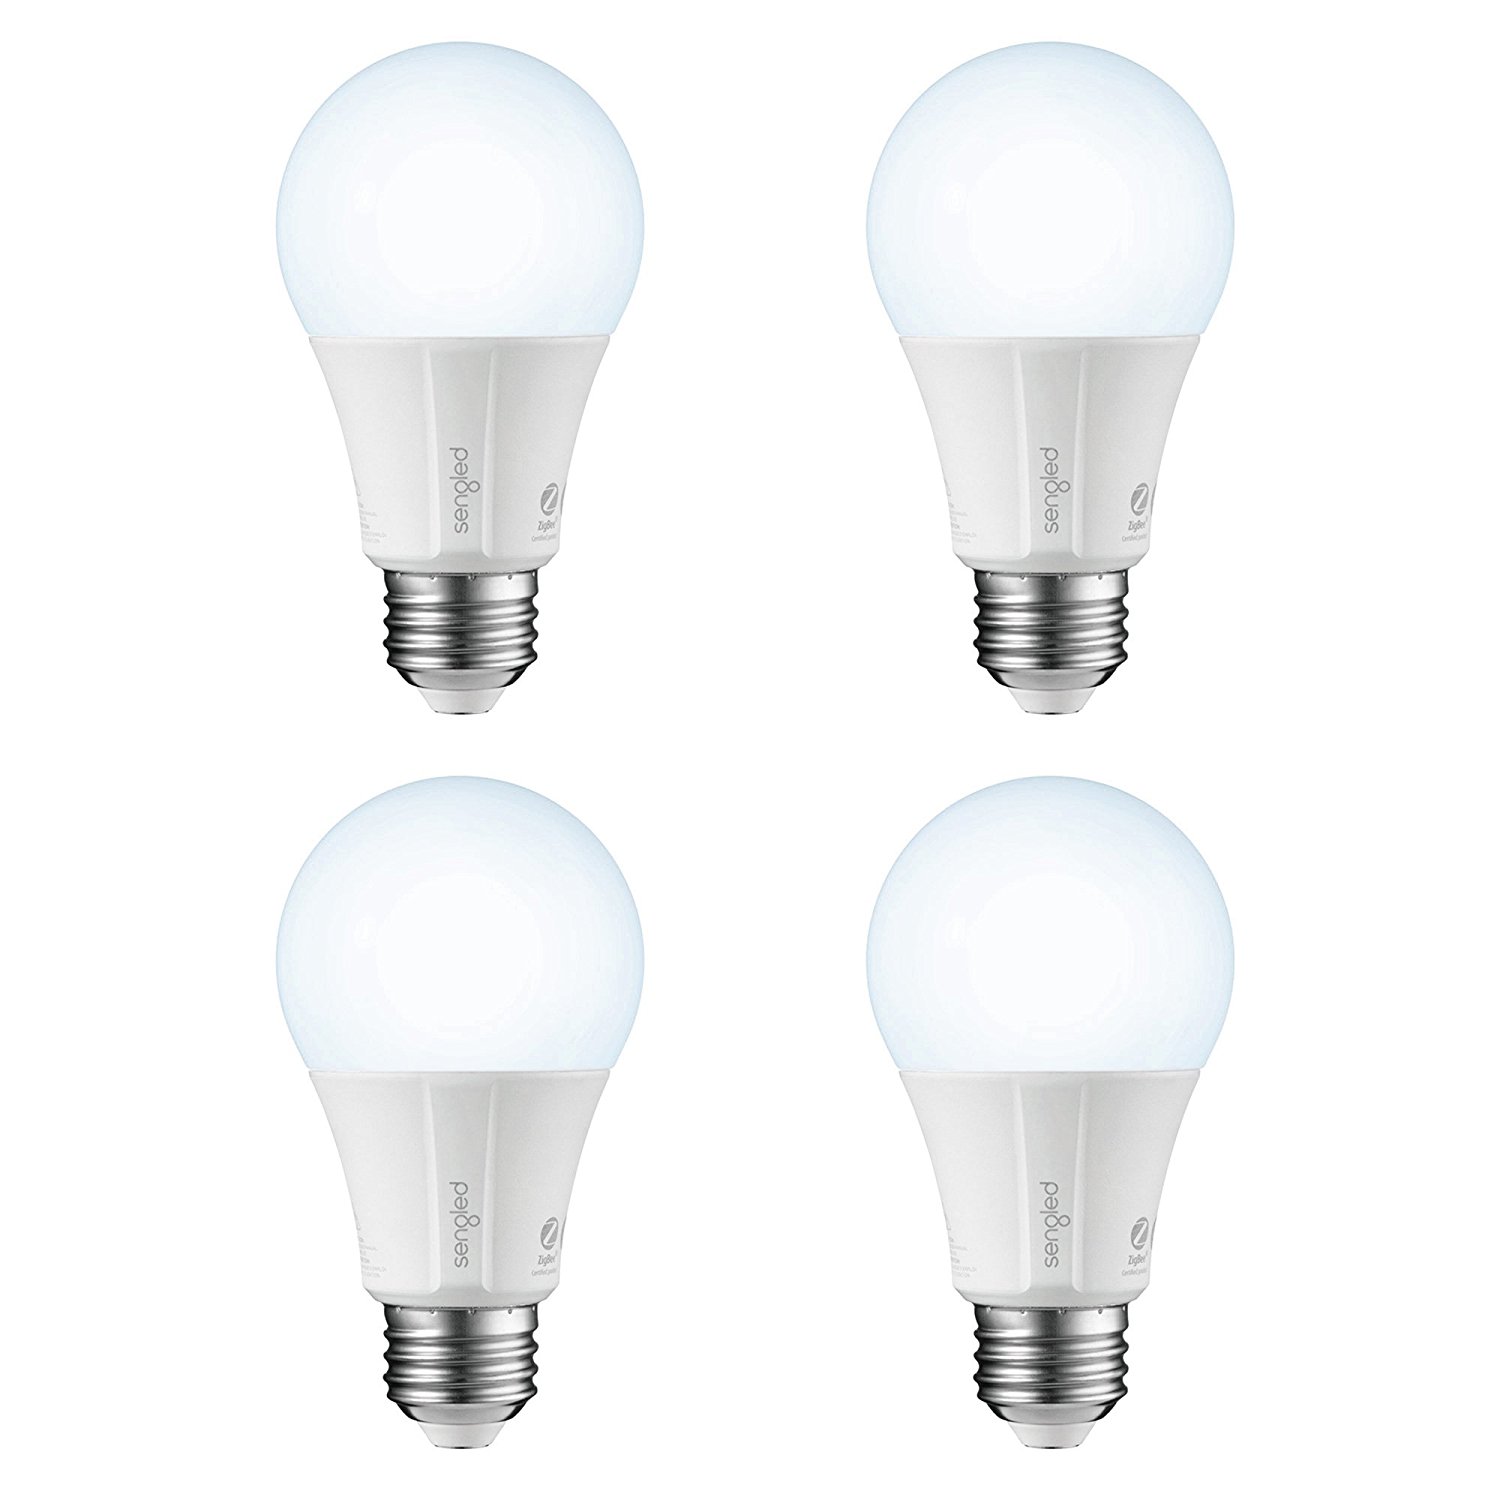 Sengled Element Classic A19 smart light LED bulb 4-pack for $29.20